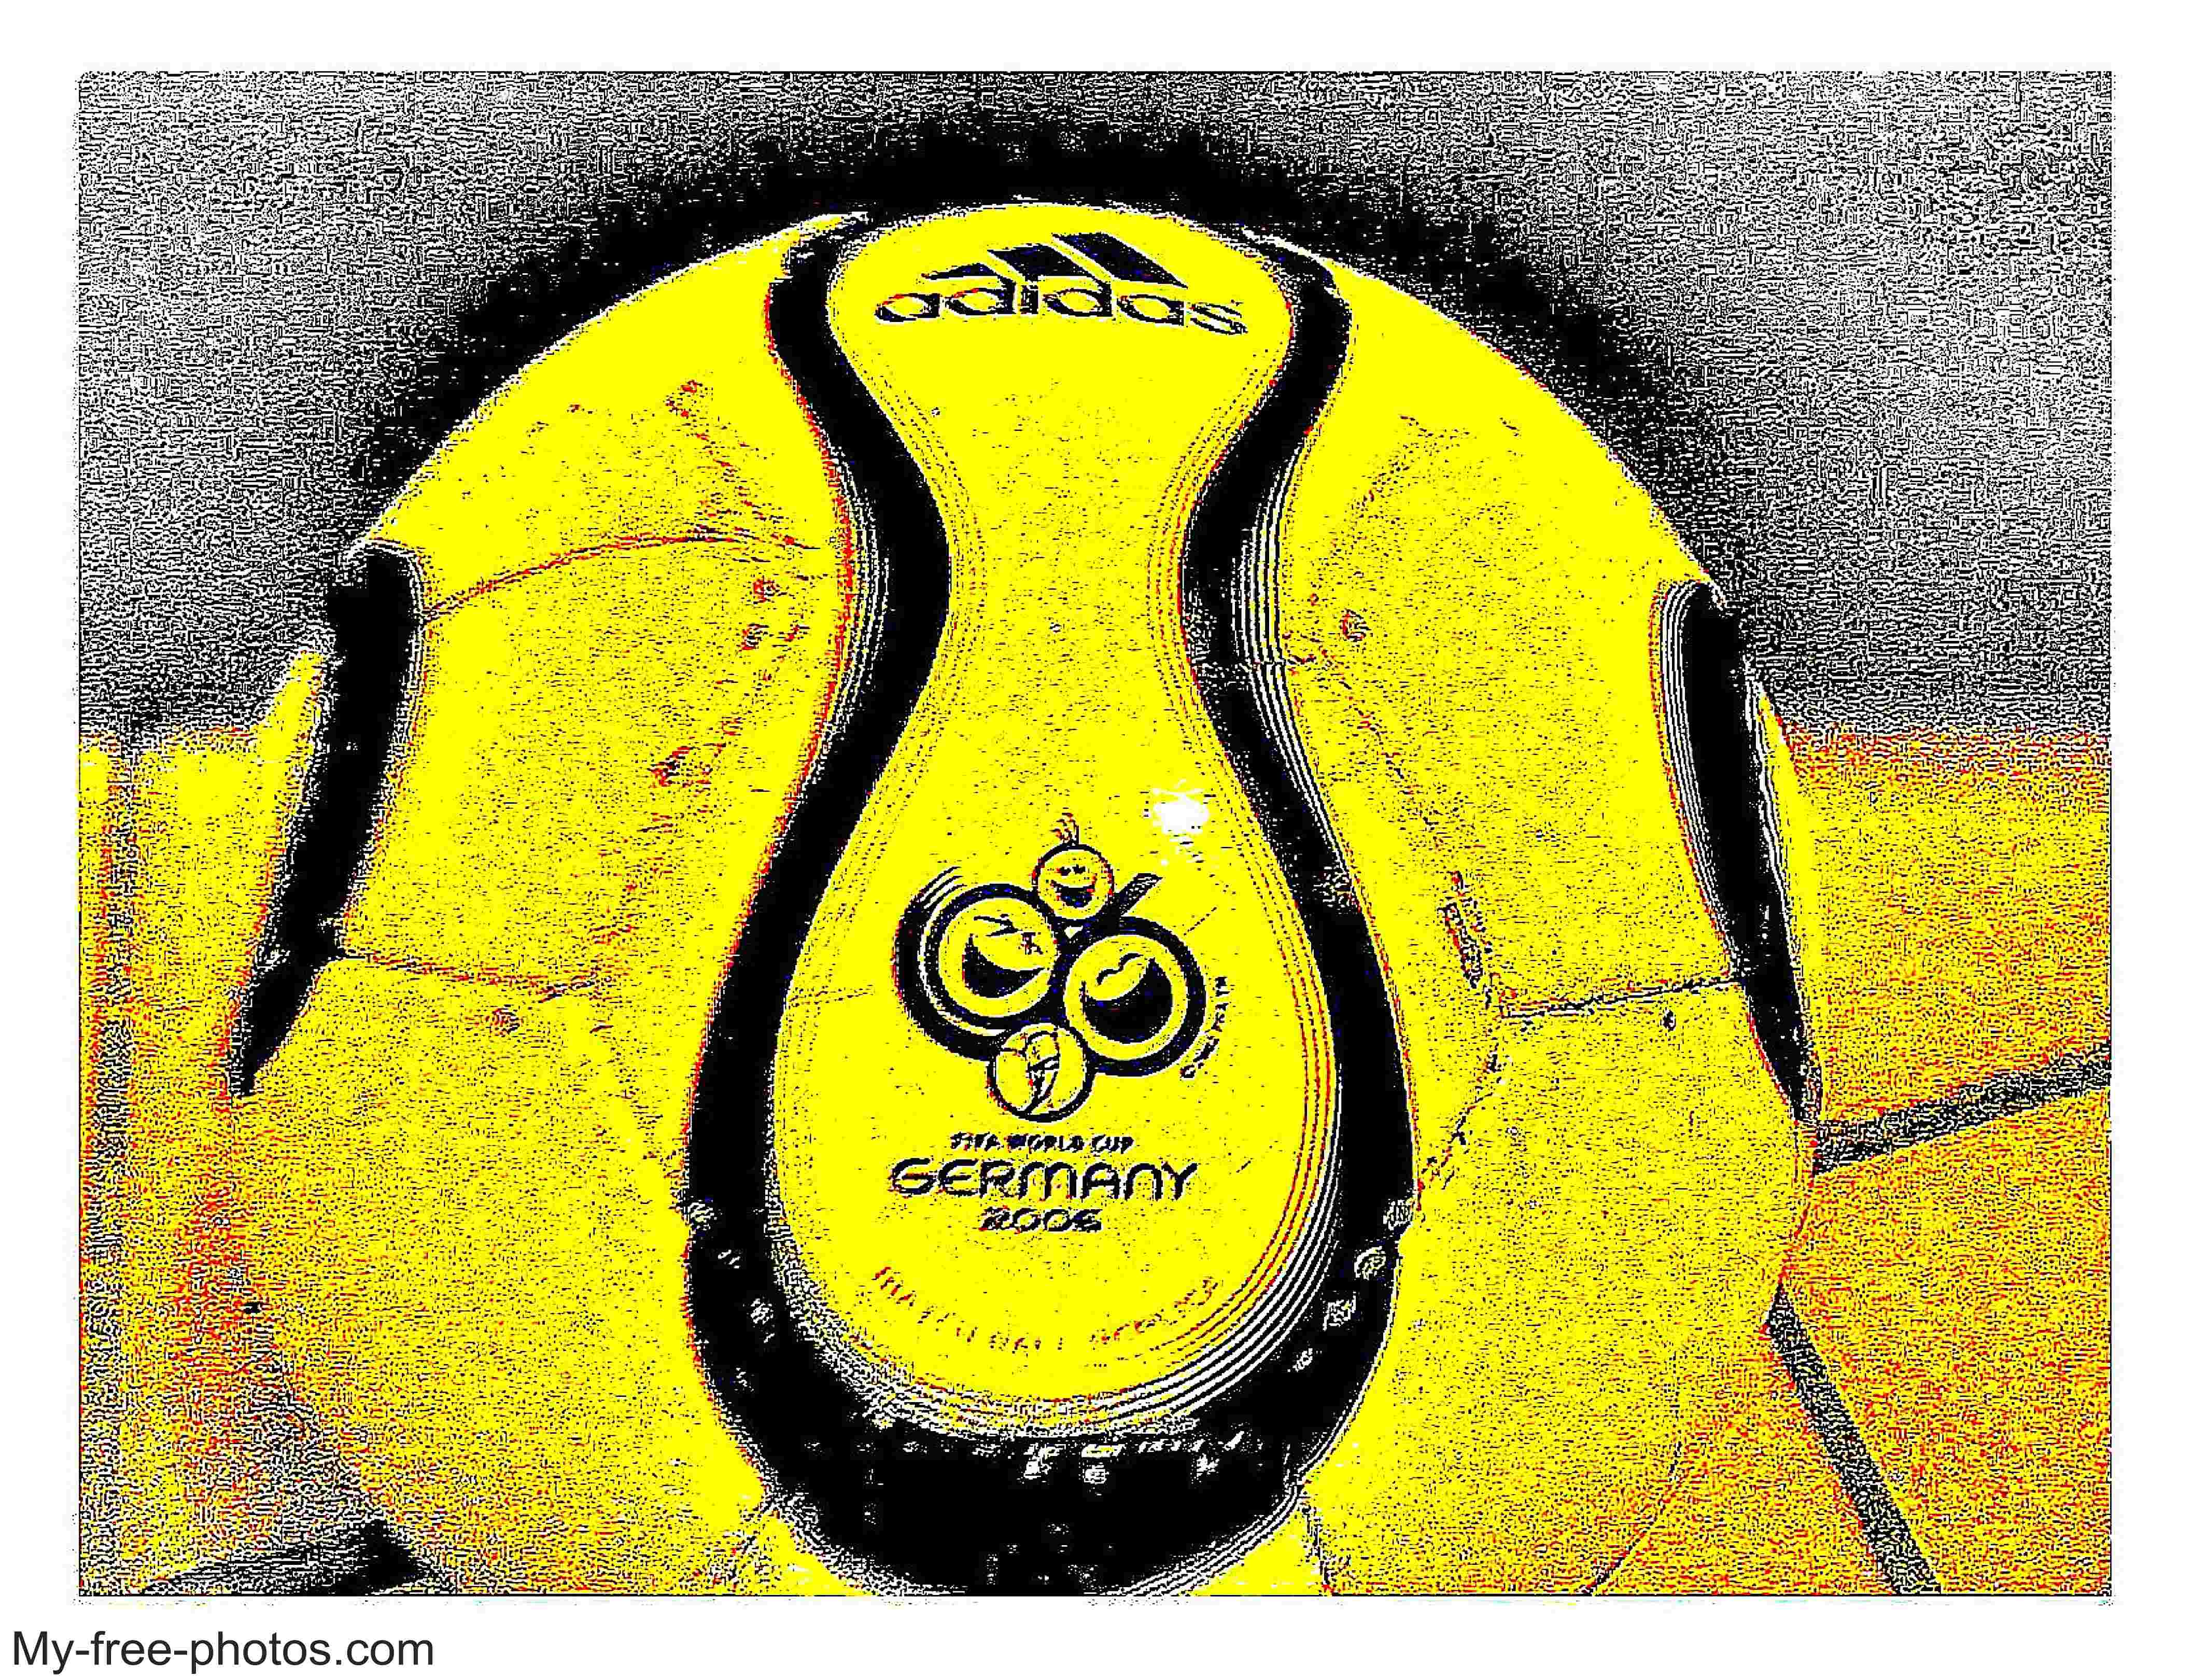 ADIDAS soccer ball.